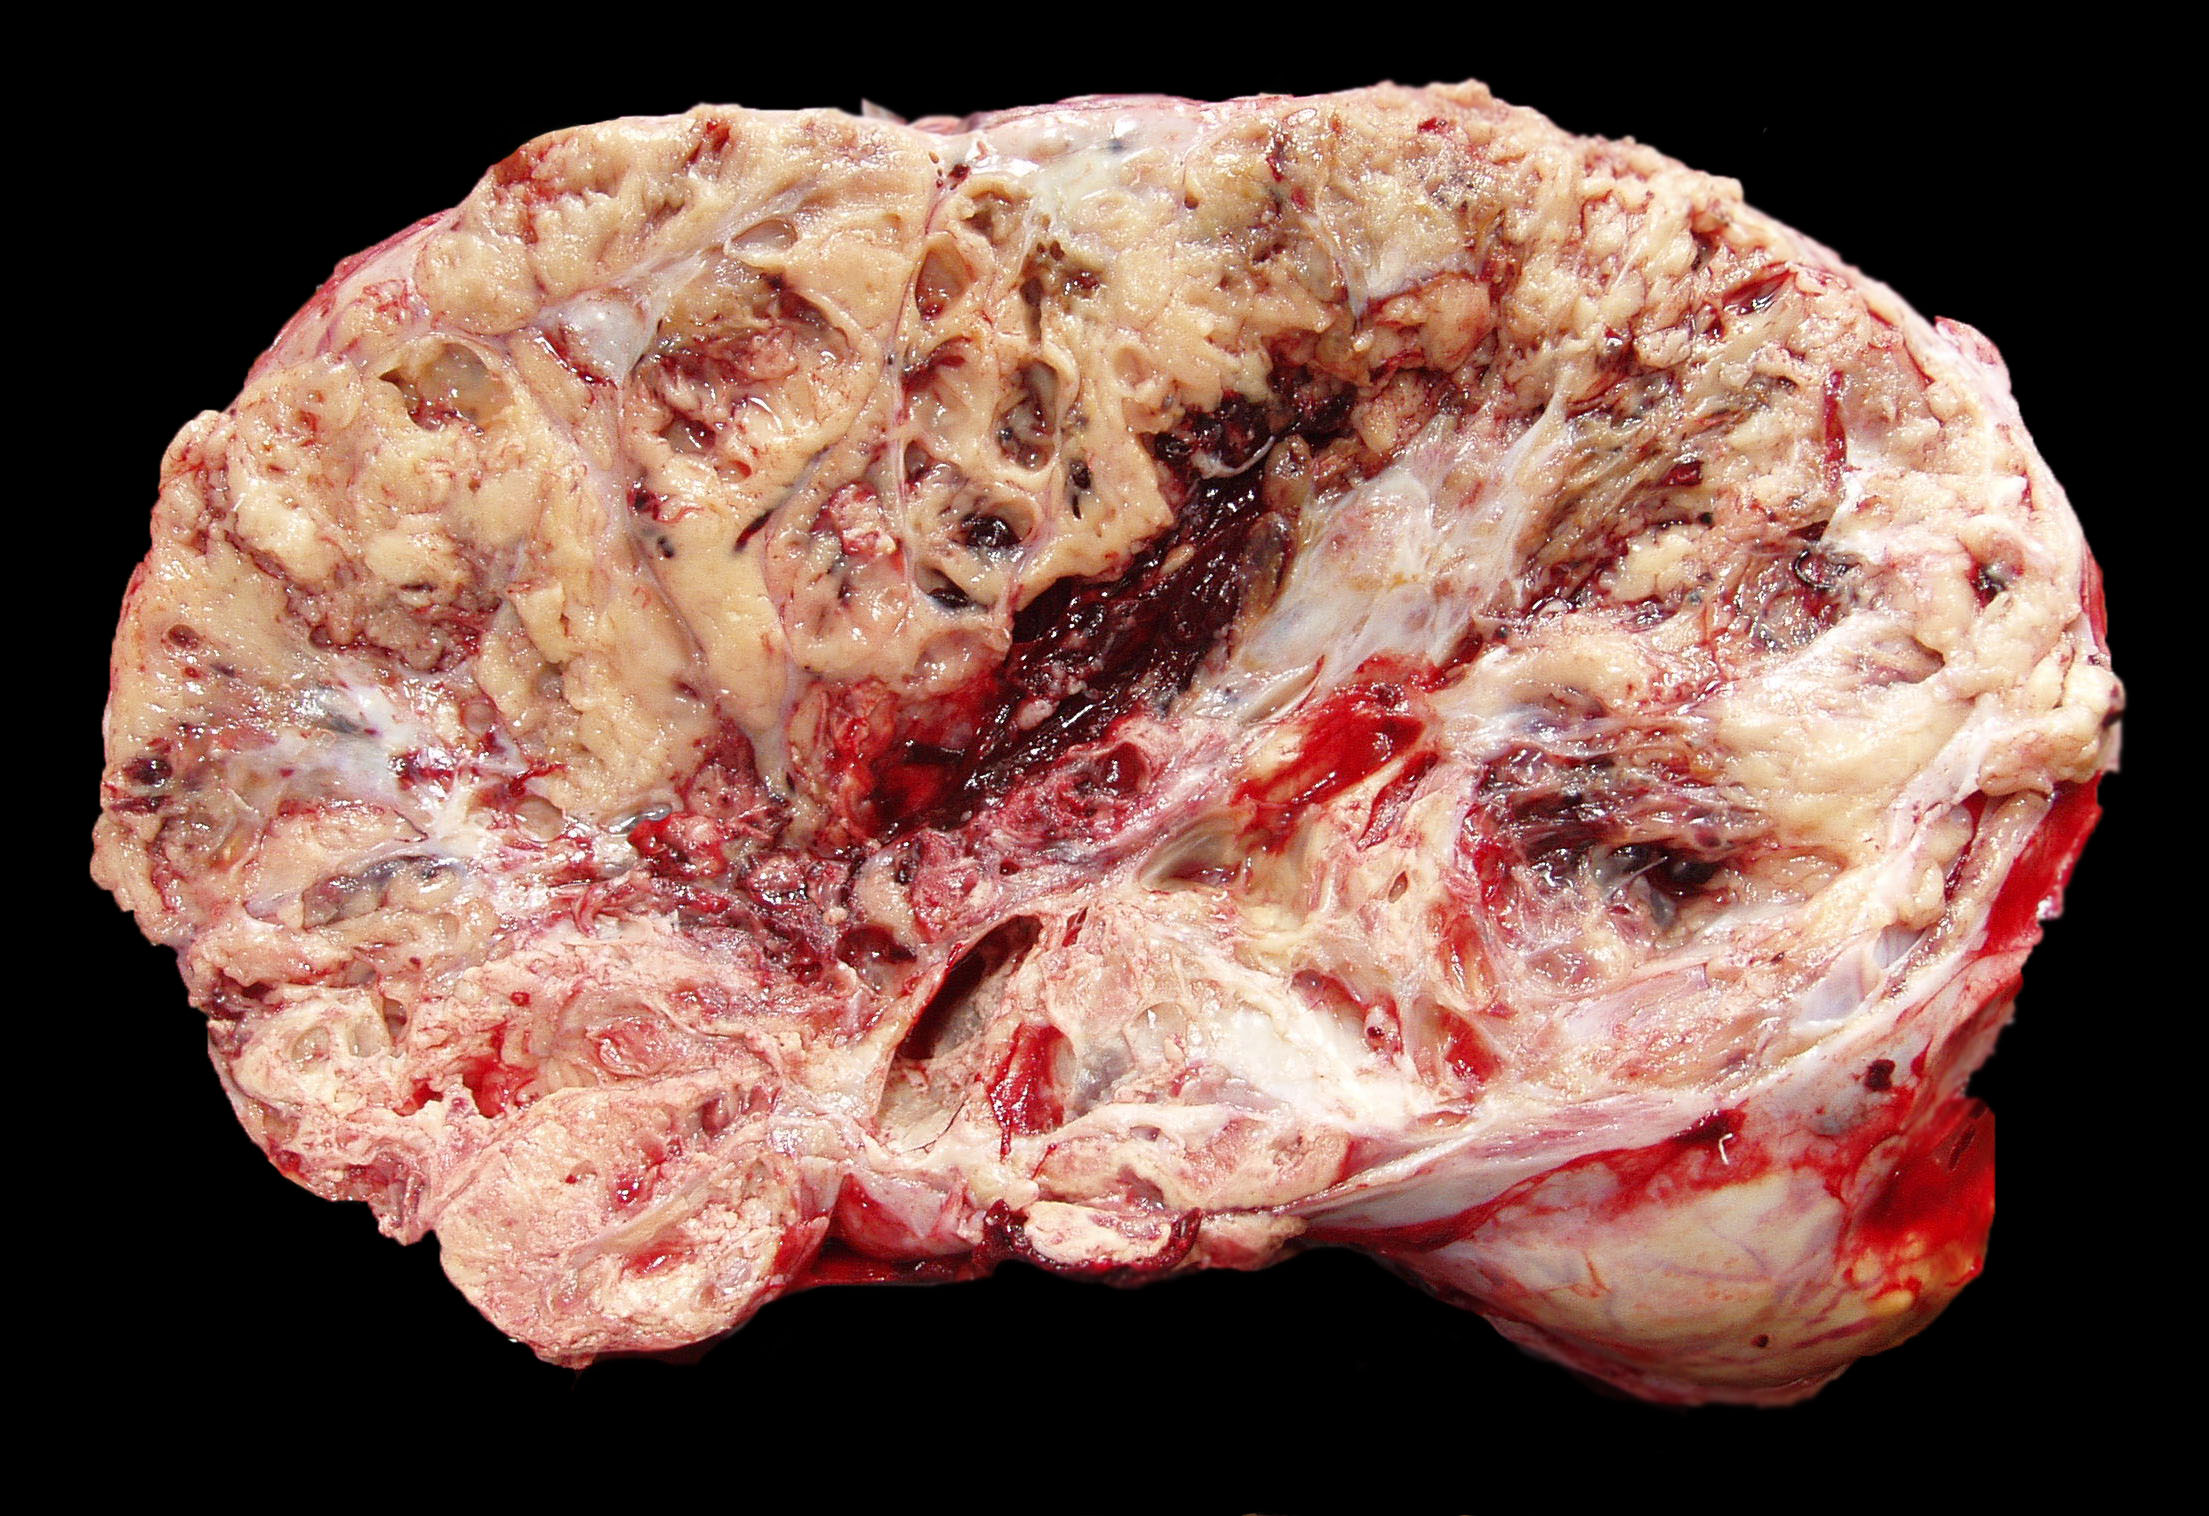 Tumor de células da granulosa do ovário - Sanar Medicina